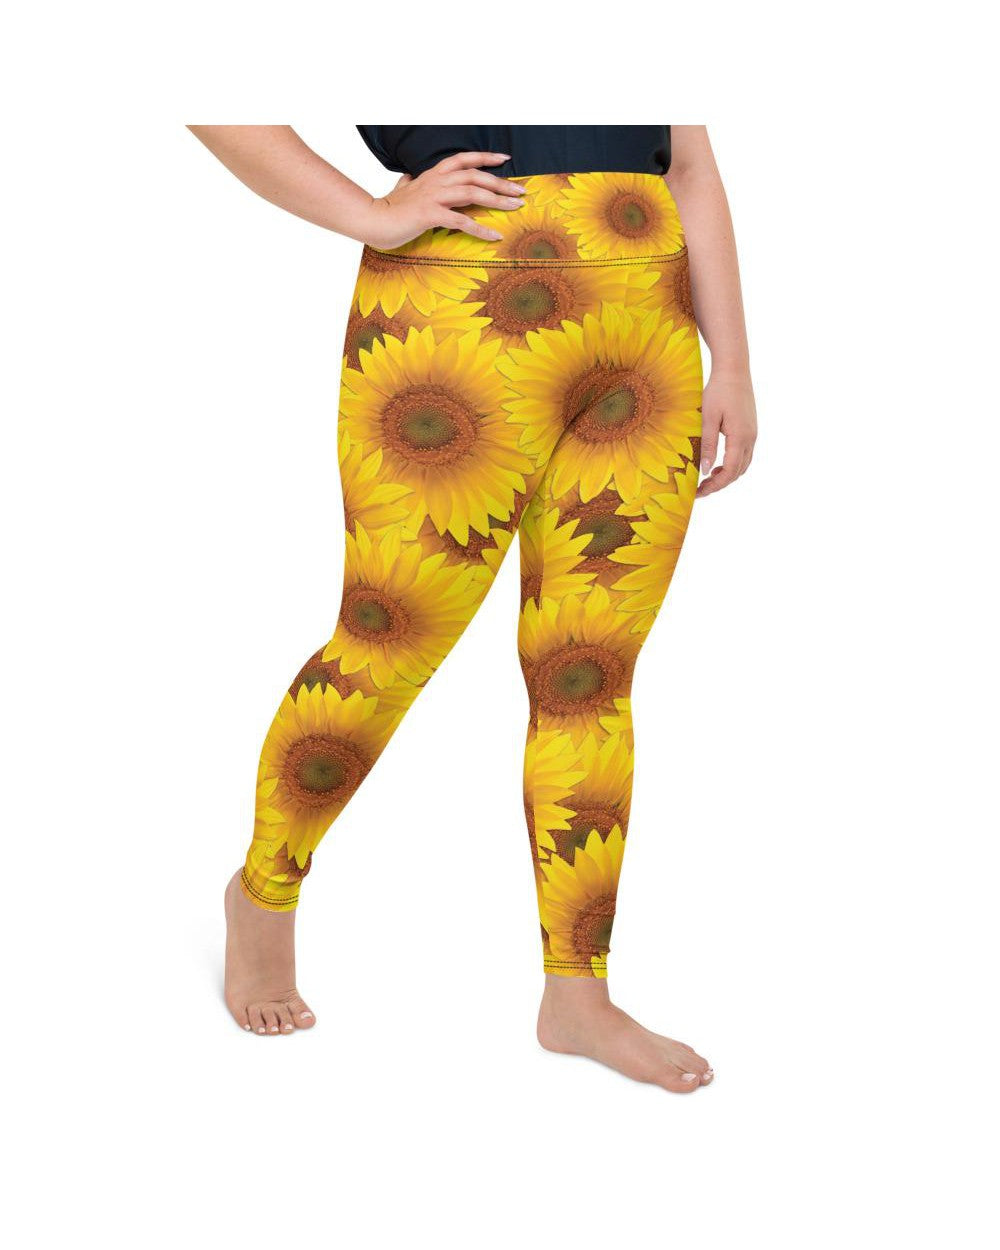 Sunflower Plus Size Leggings